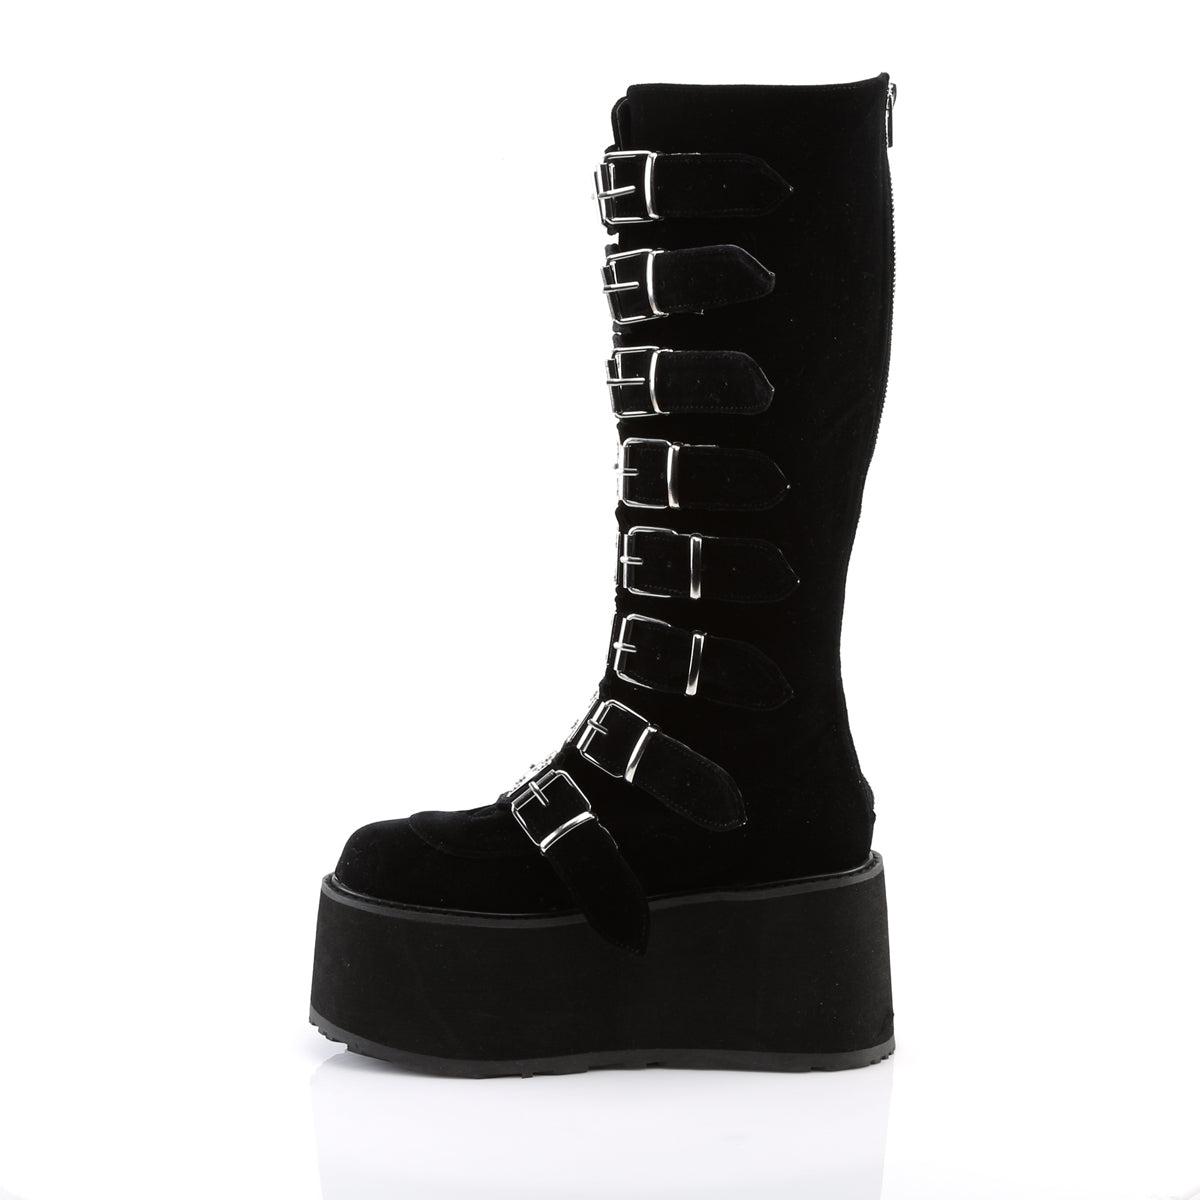 DAMNED-318 Demonia Black Velvet Women's Mid-Calf & Knee High Boots [Demonia Cult Alternative Footwear]